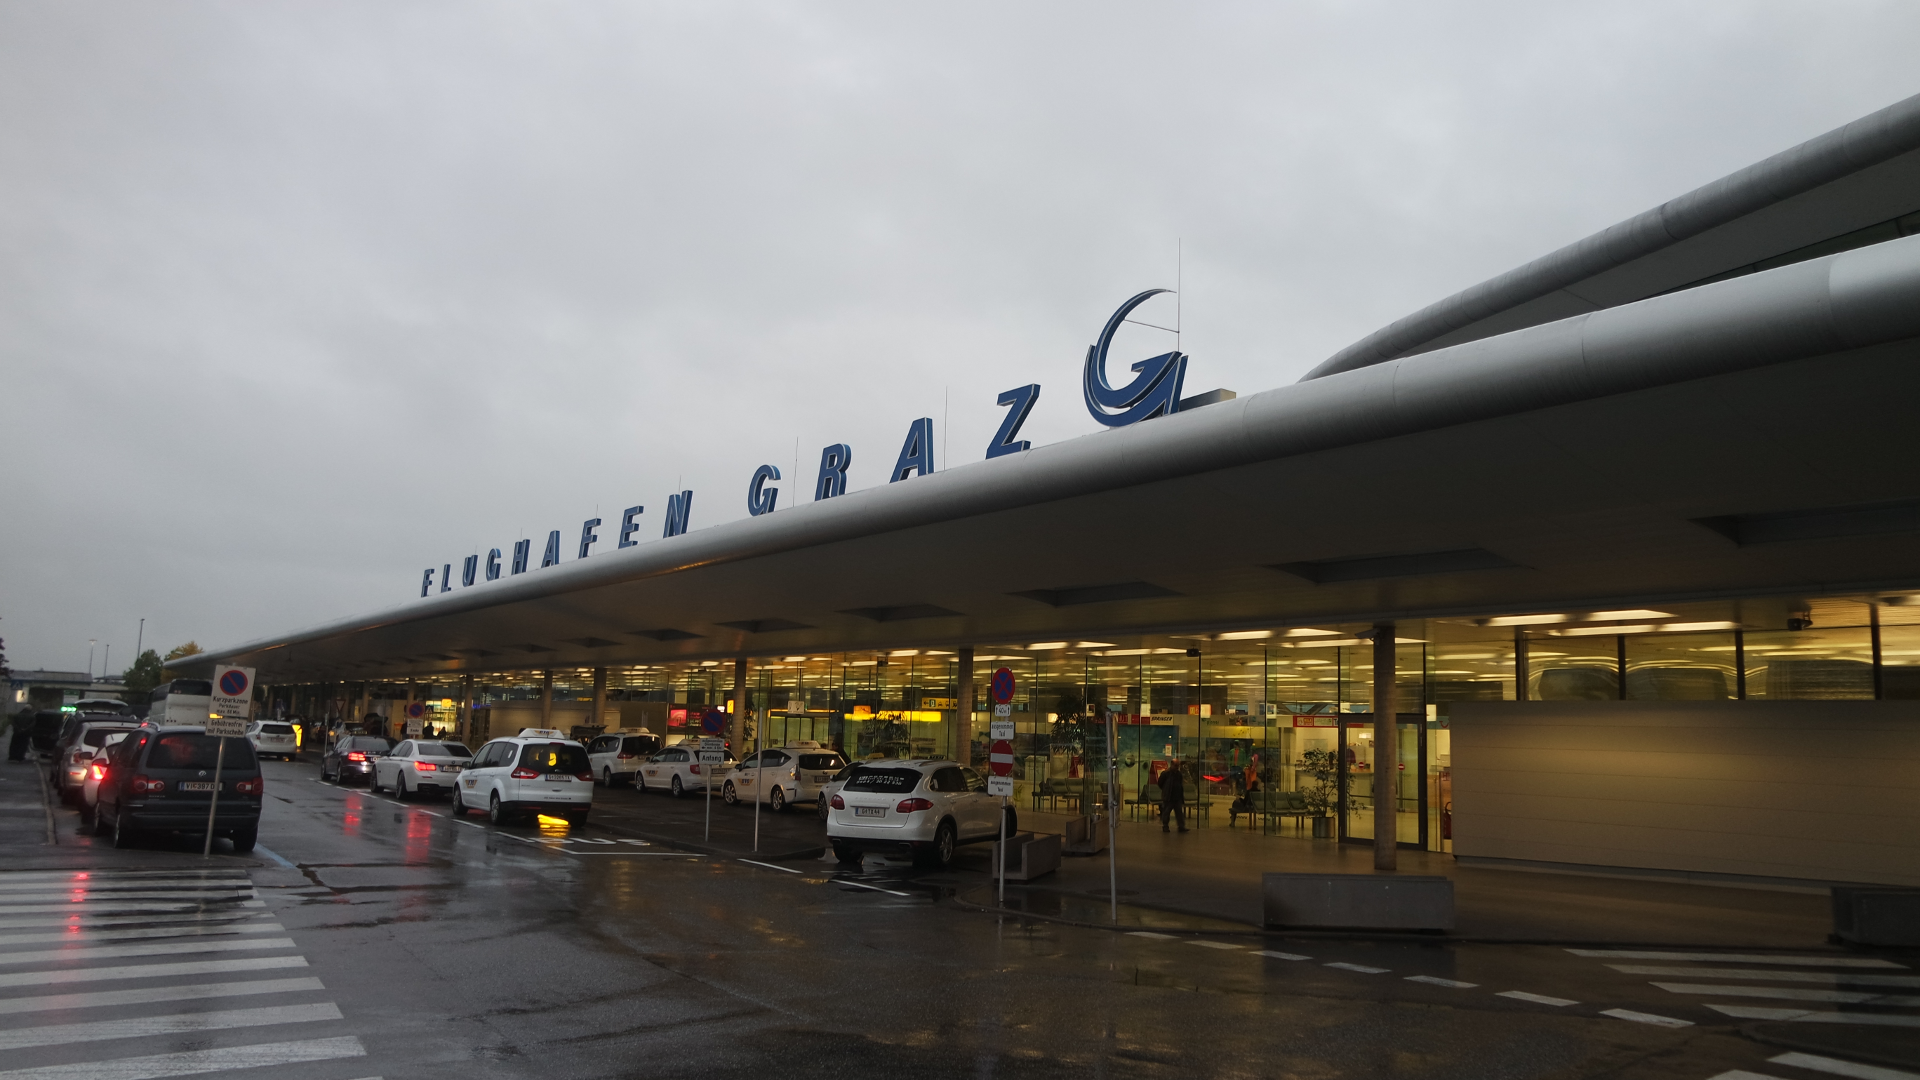 Flughafen-Graz-Feldkirchen-Gate